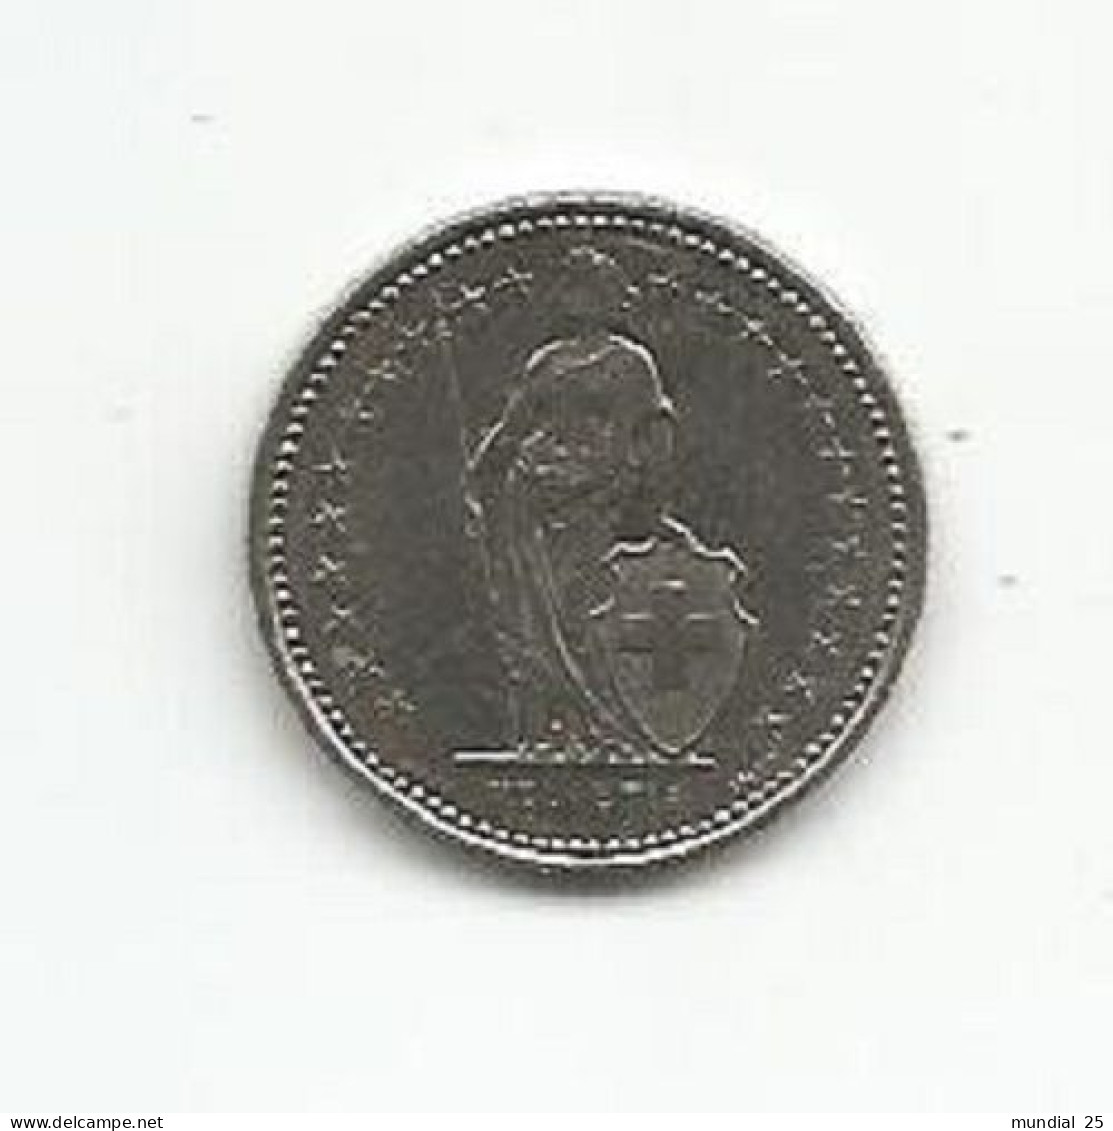 SWITZERLAND 1/2 FRANC 1983 - 1/2 Franken